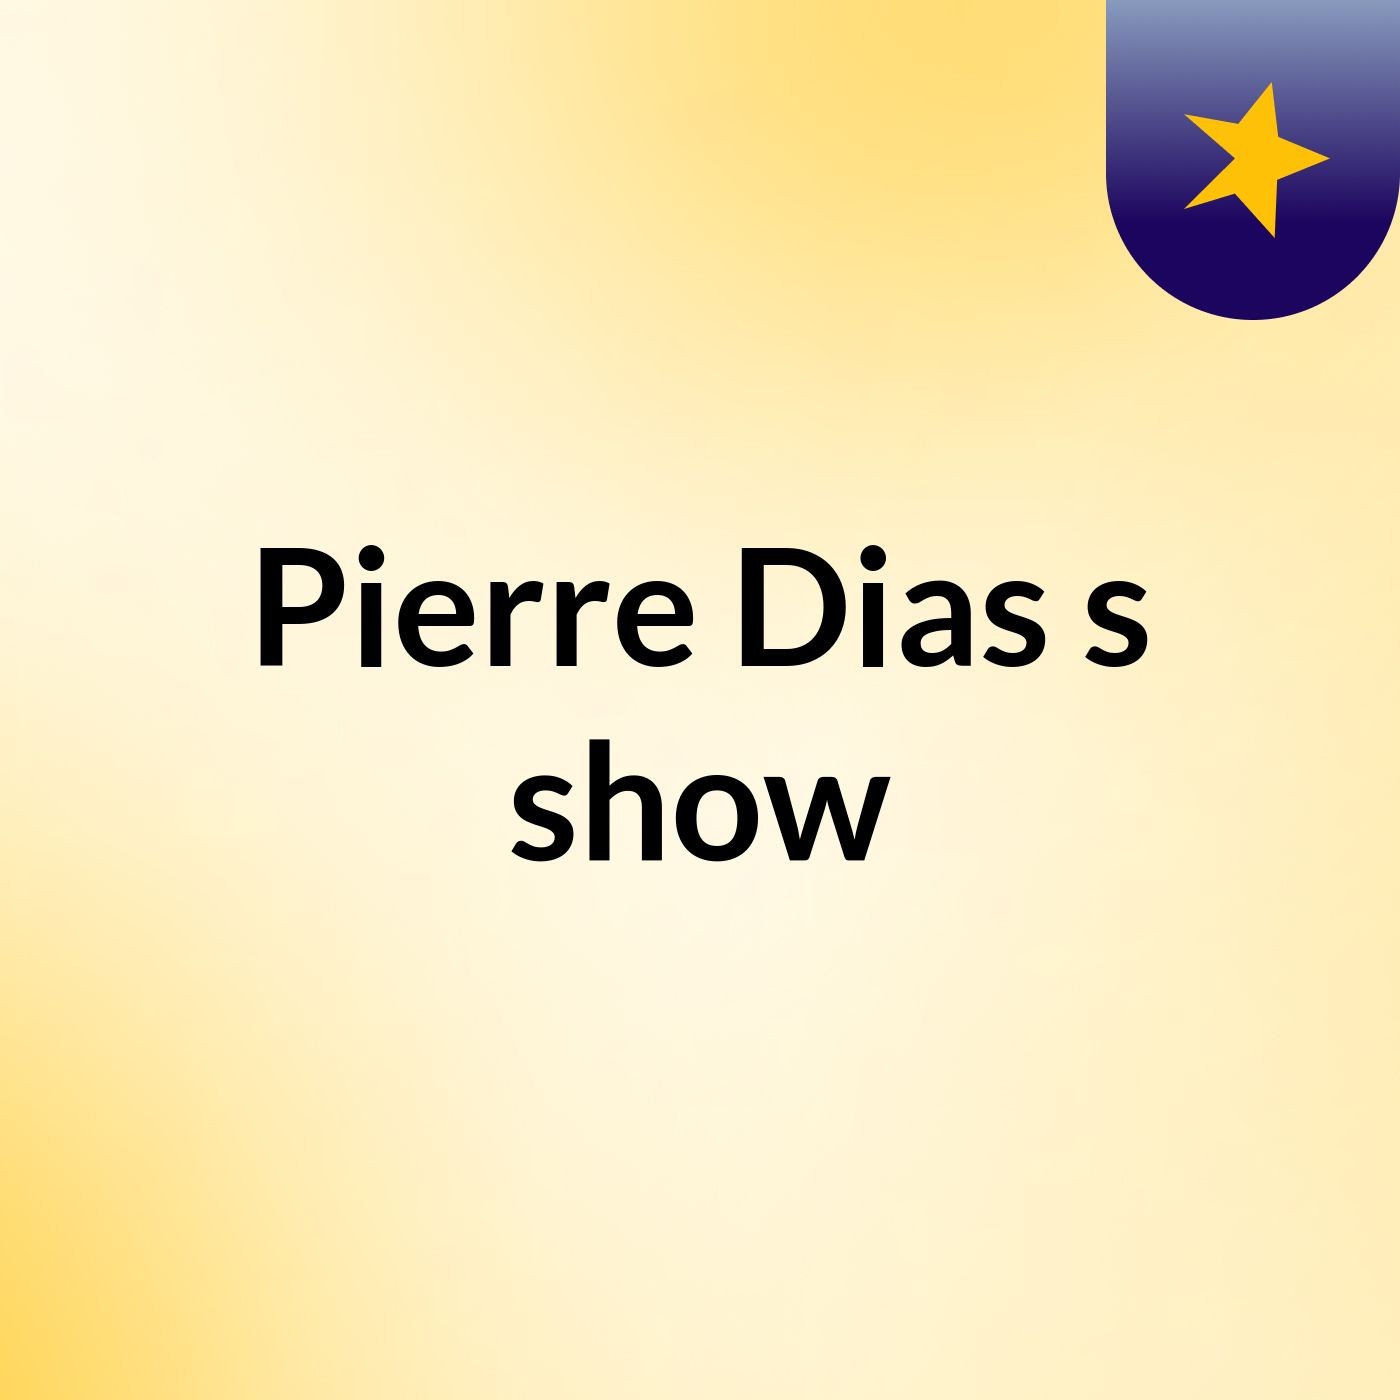 Pierre Dias's show